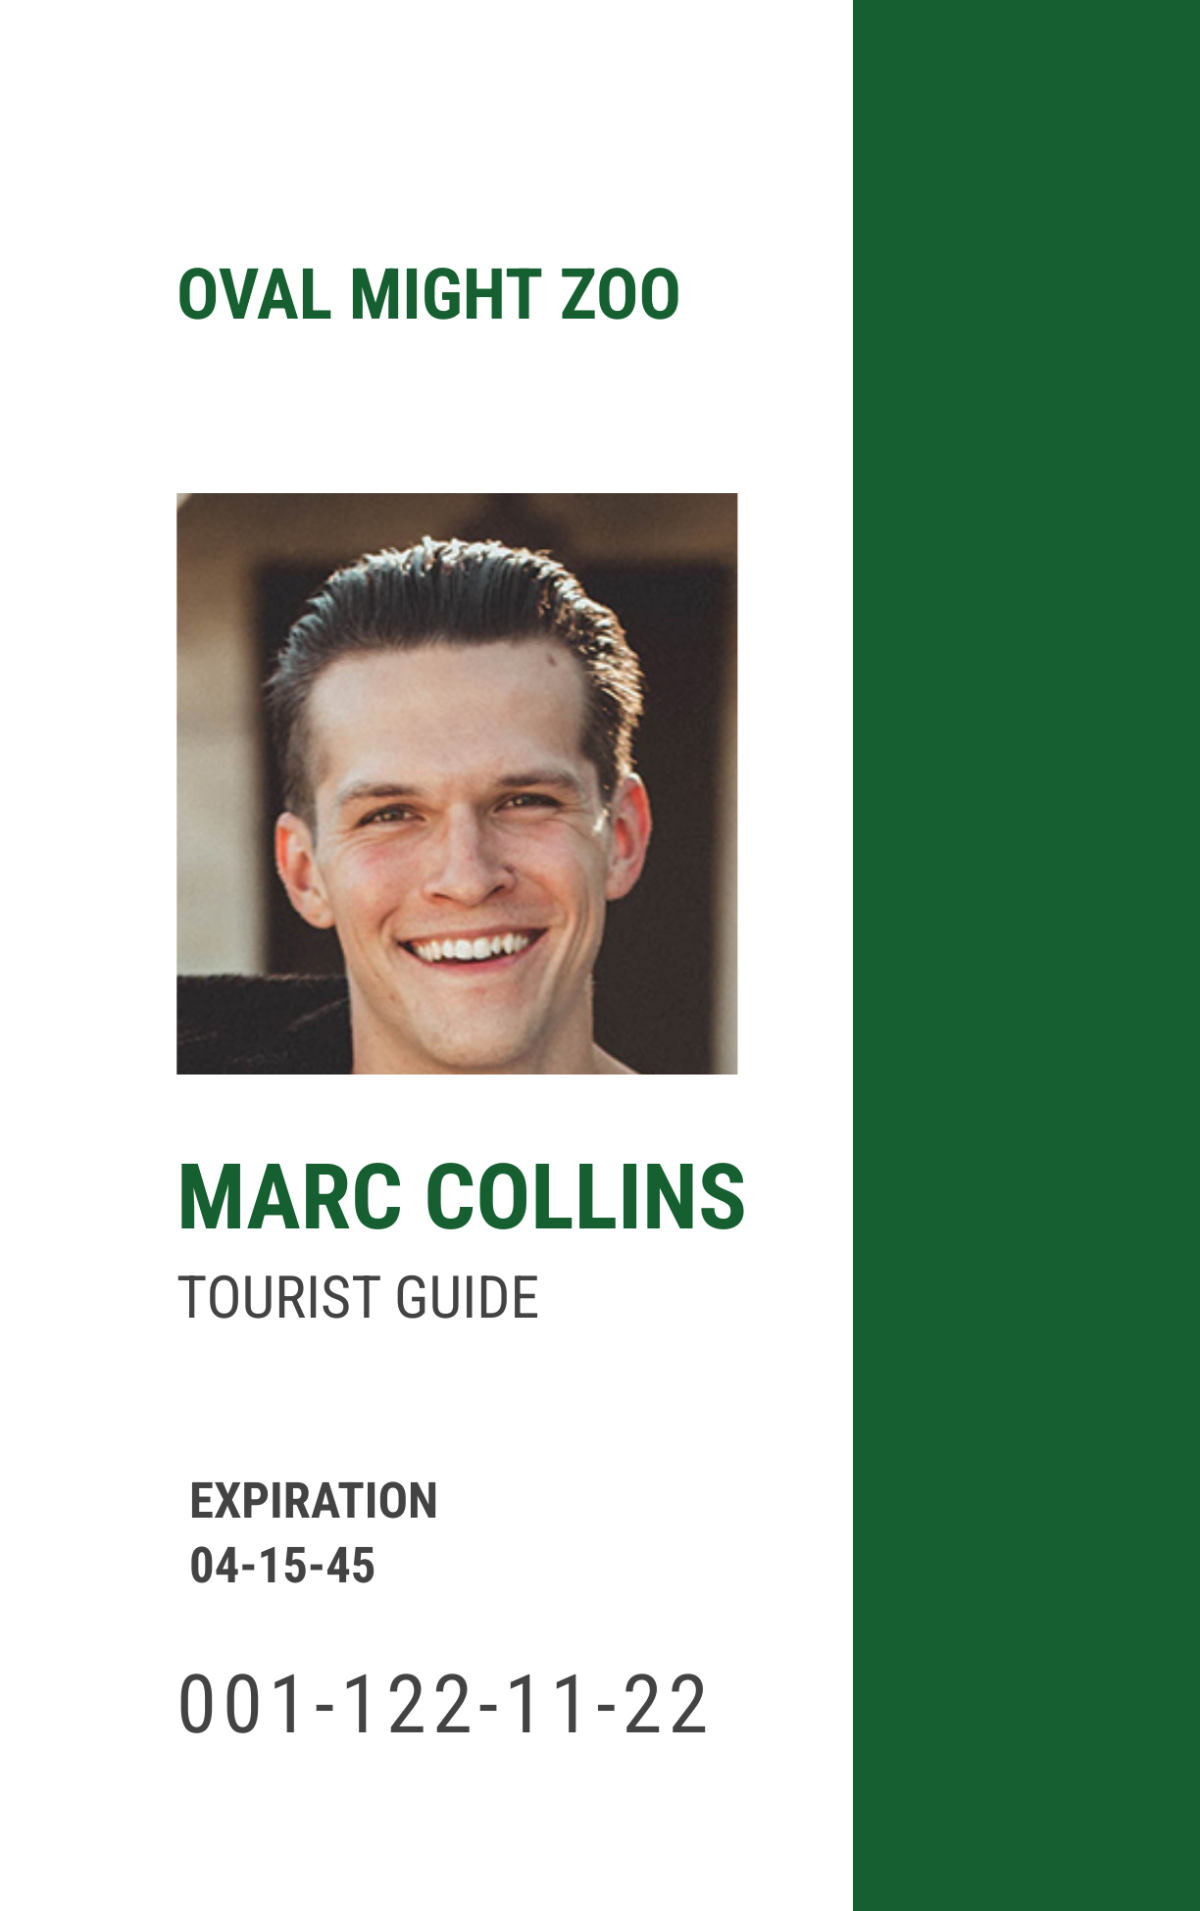 Tourist Guide ID Card